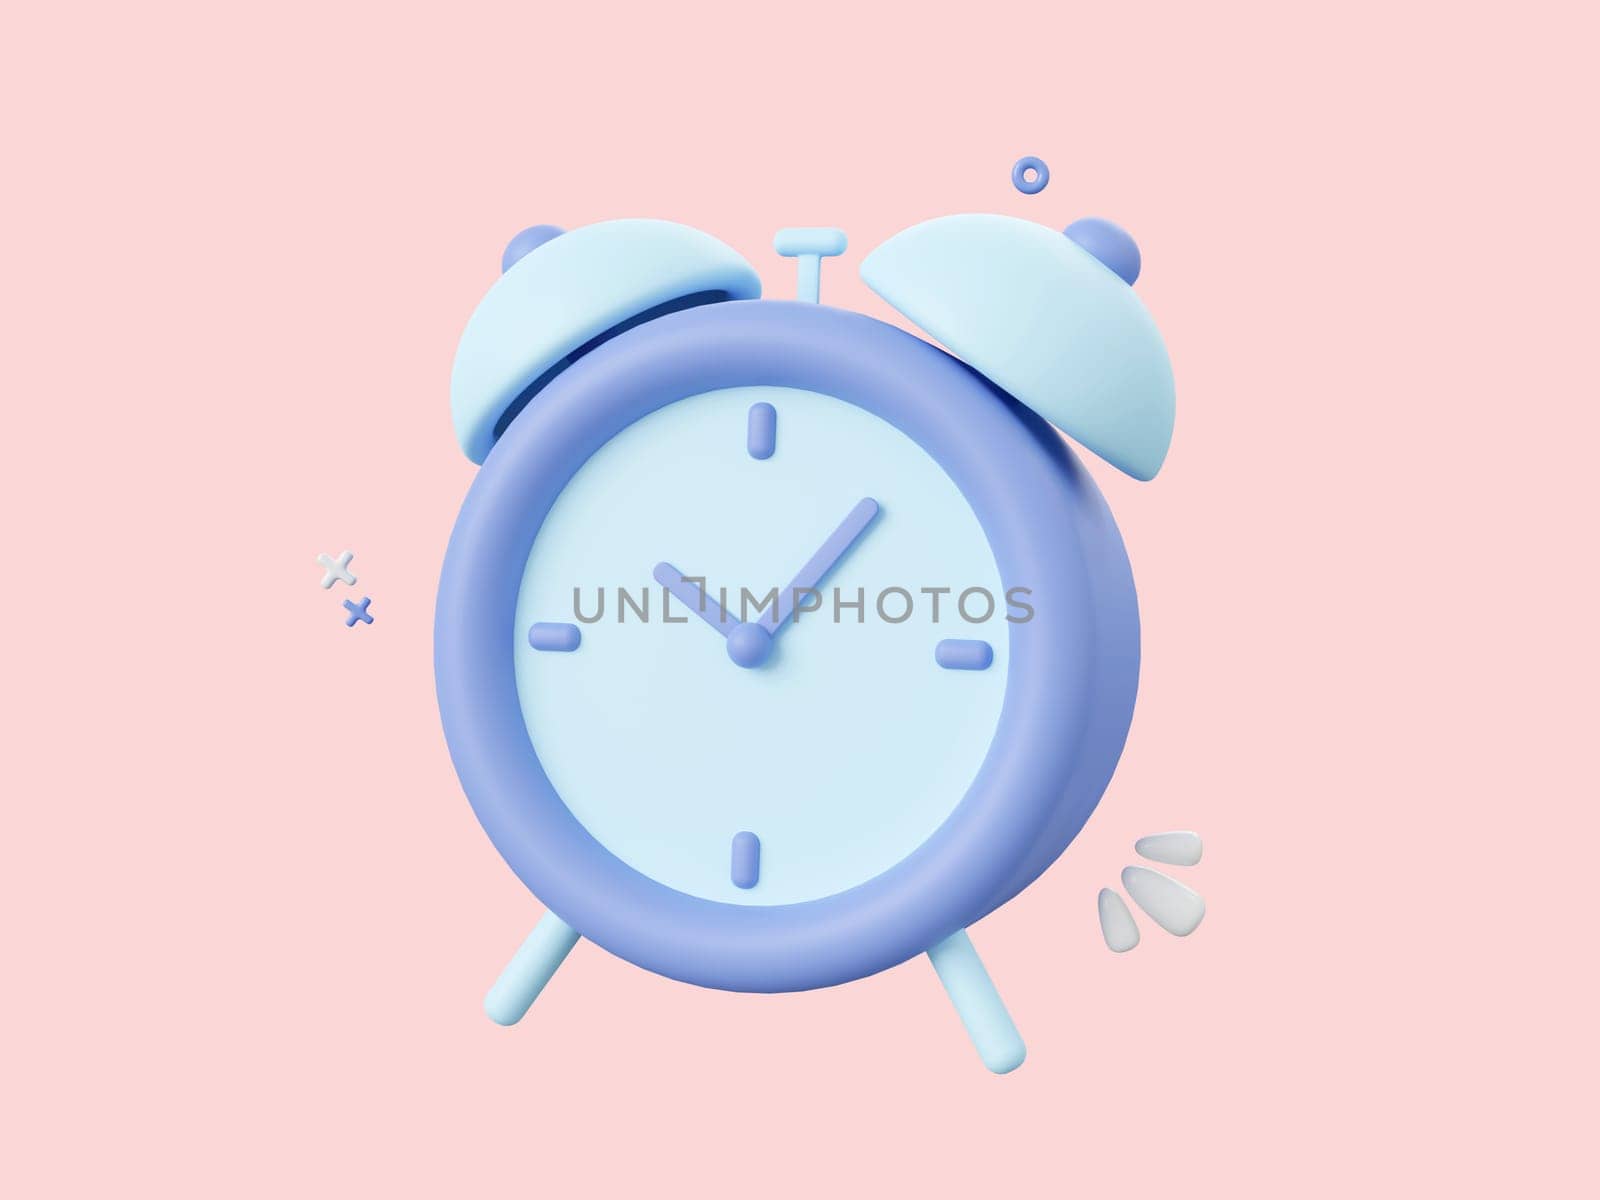 3d cartoon design illustration of alarm clock isolated icon, reminder alert concept.